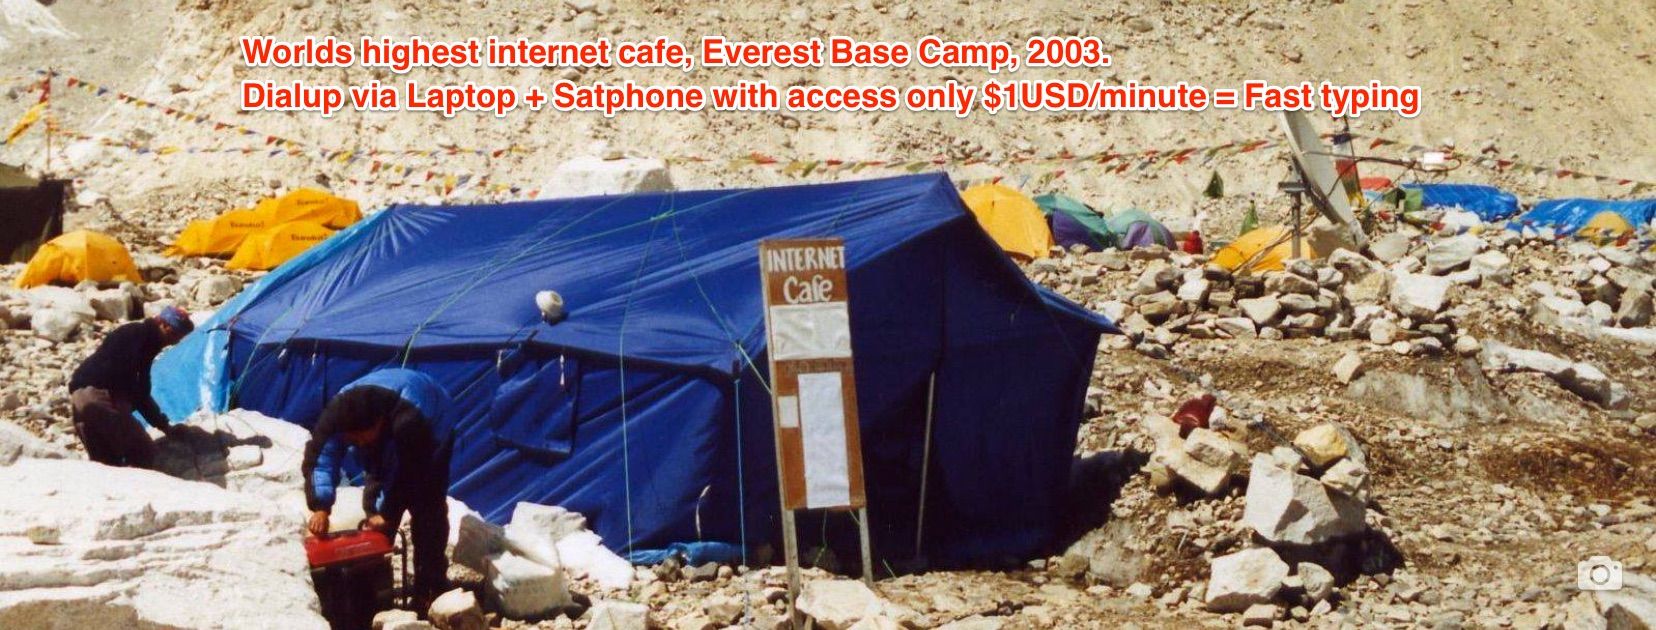 Photo of large blue tent housing worlds highest internet cafe at Everest base camp.